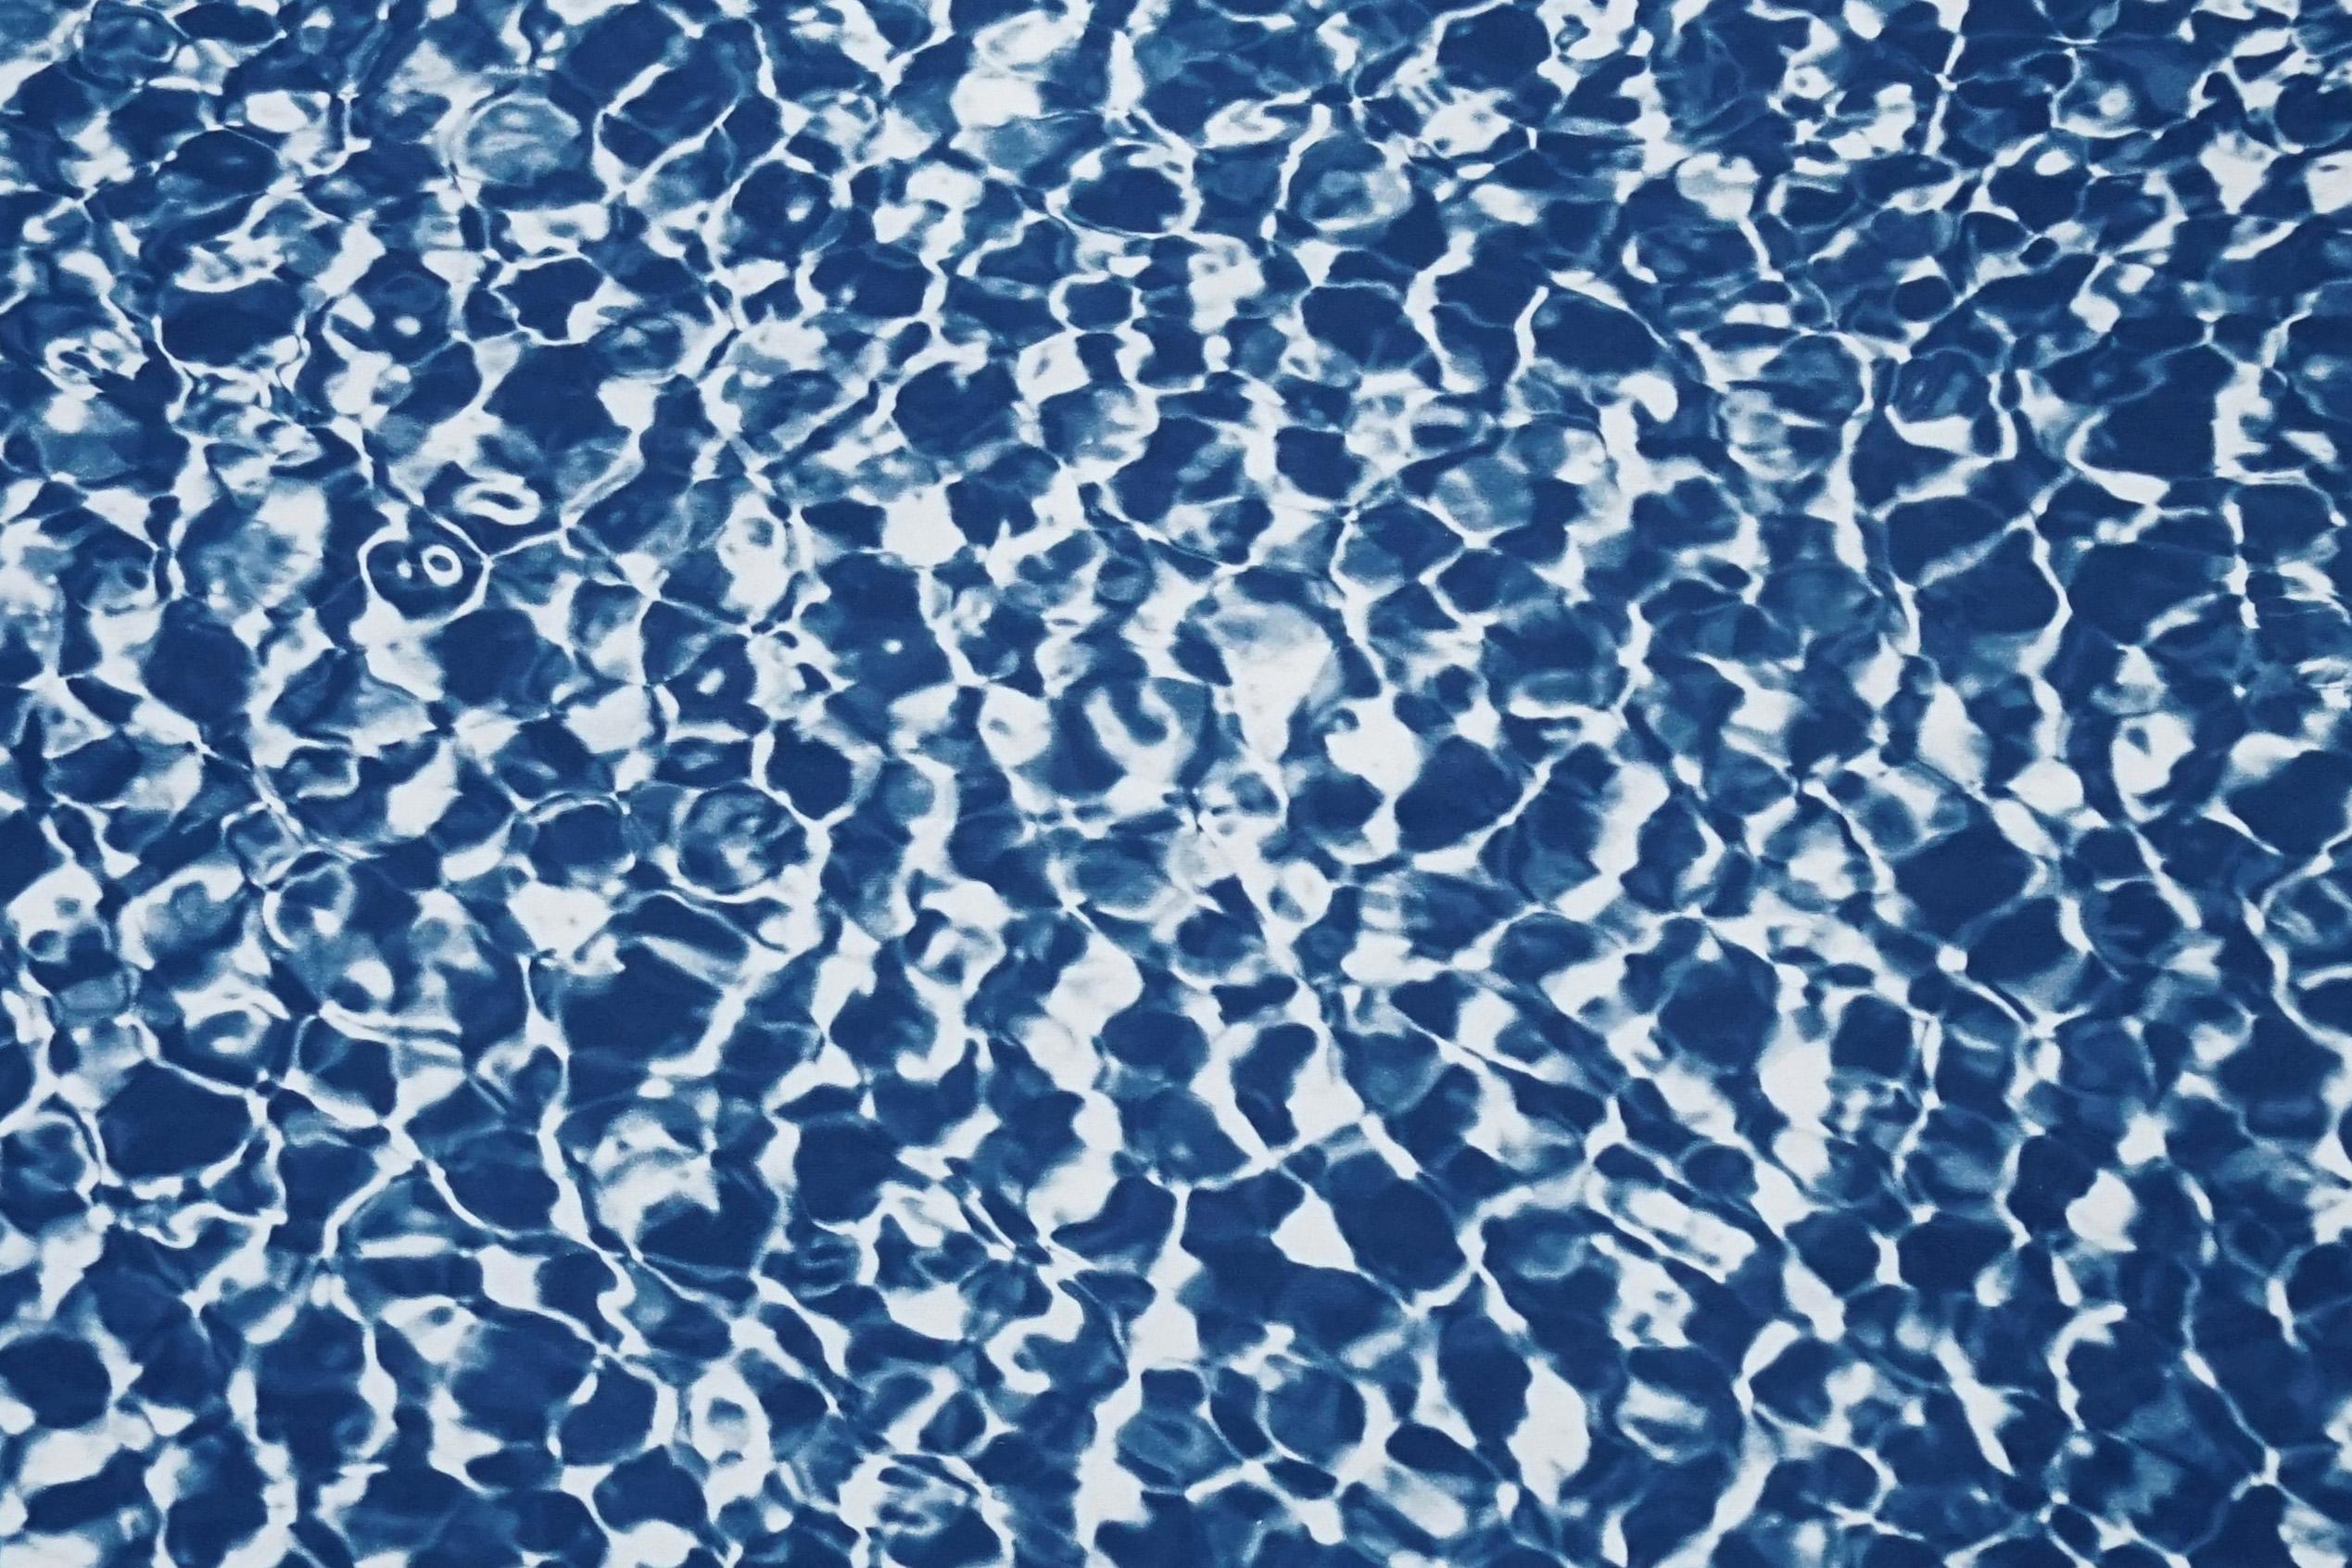 Infinity Pool Water Reflections, Blue & White Pattern, Handmade Cyanotype Print 3